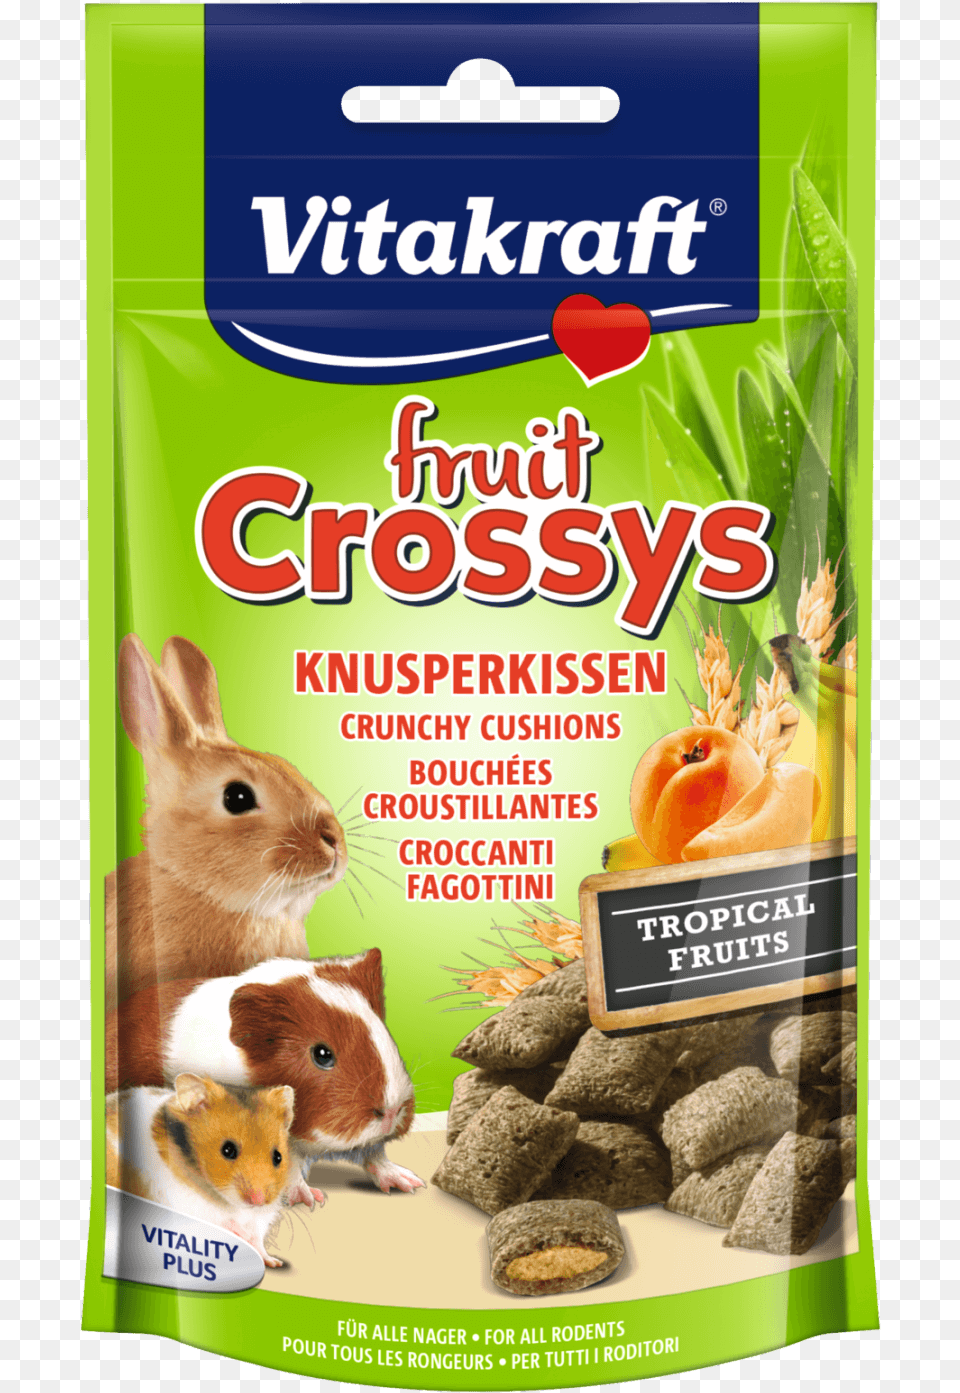 Vitakraft Fruit Crossys, Animal, Mammal, Rat, Rodent Png Image